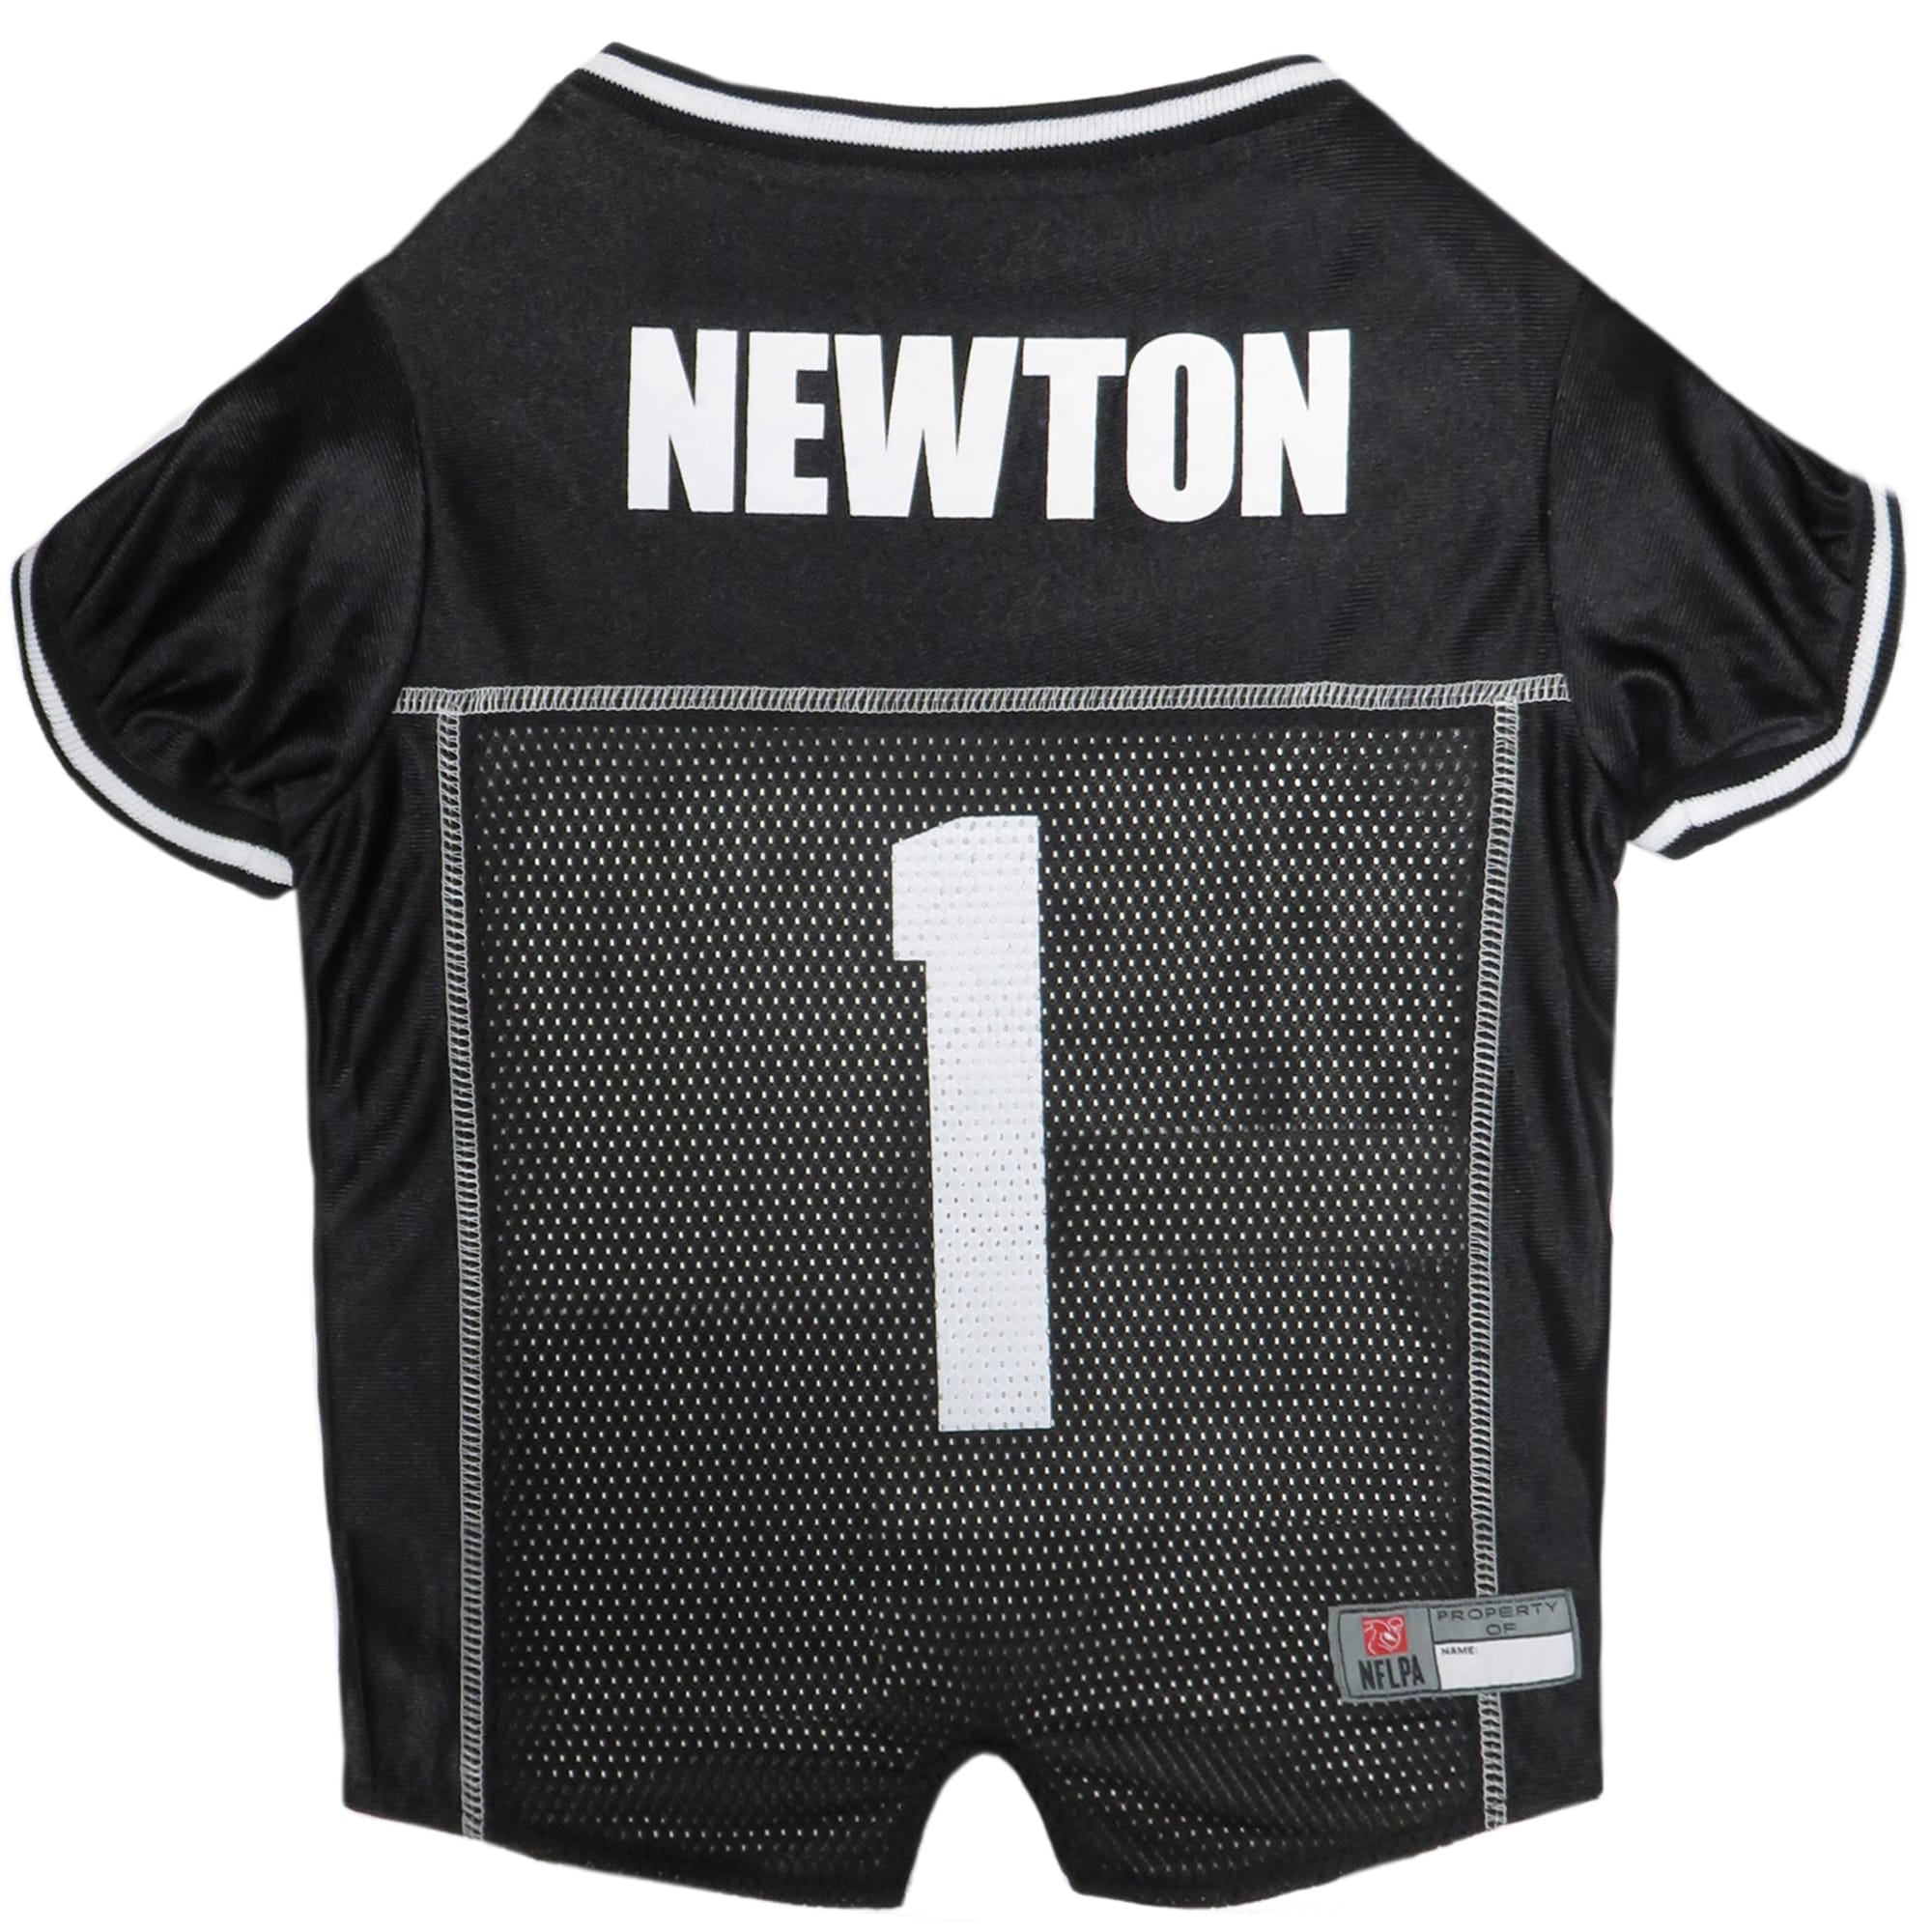 cam newton jersey near me